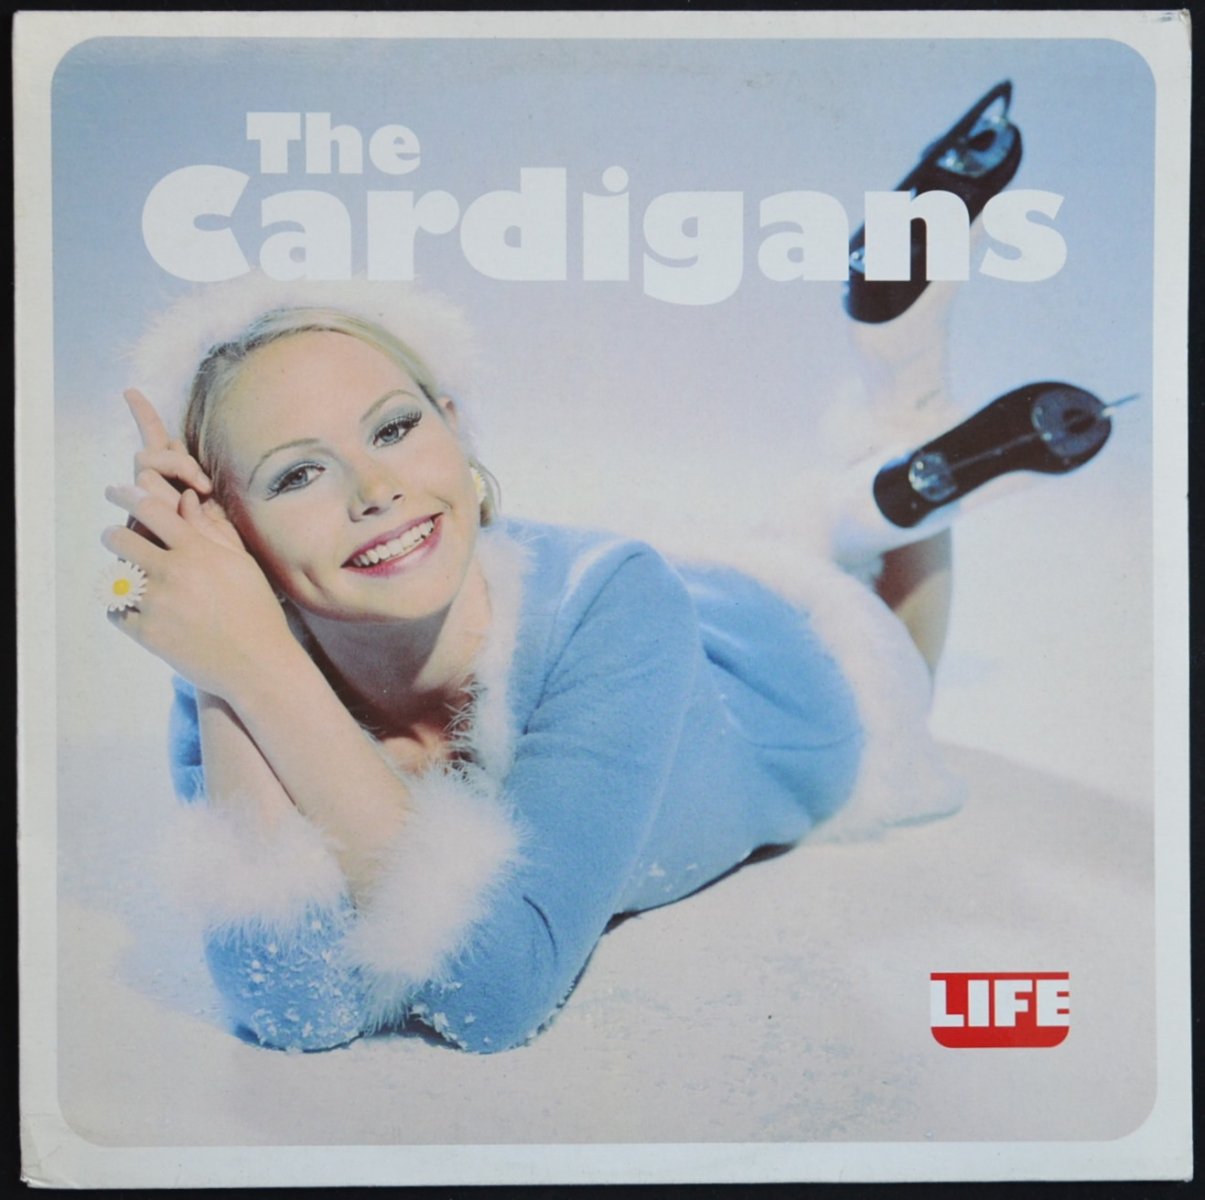 THE CARDIGANS / LIFE (1LP) - HIP TANK RECORDS